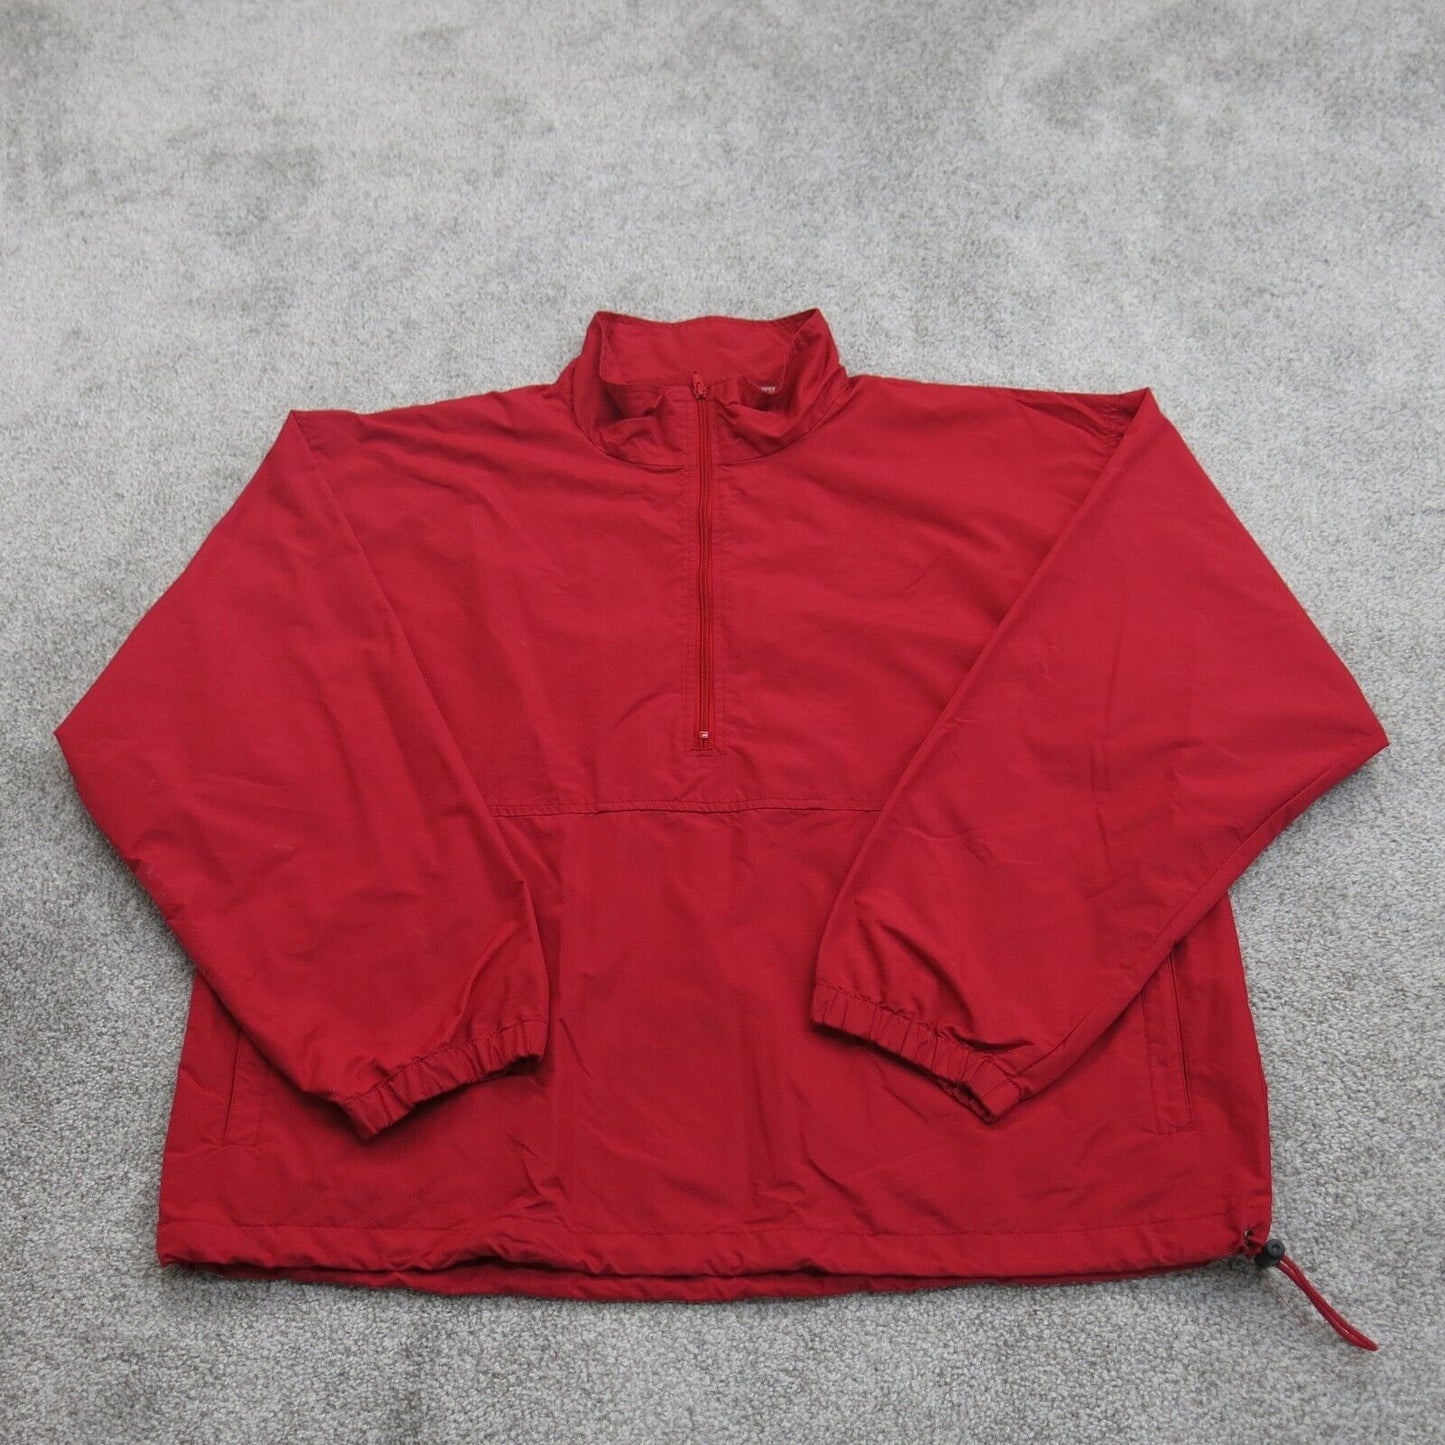 Lands End Mens Windbreaker Jacket 1/2 Zip Waterproof Long Sleeve Red Sz L(42-44)